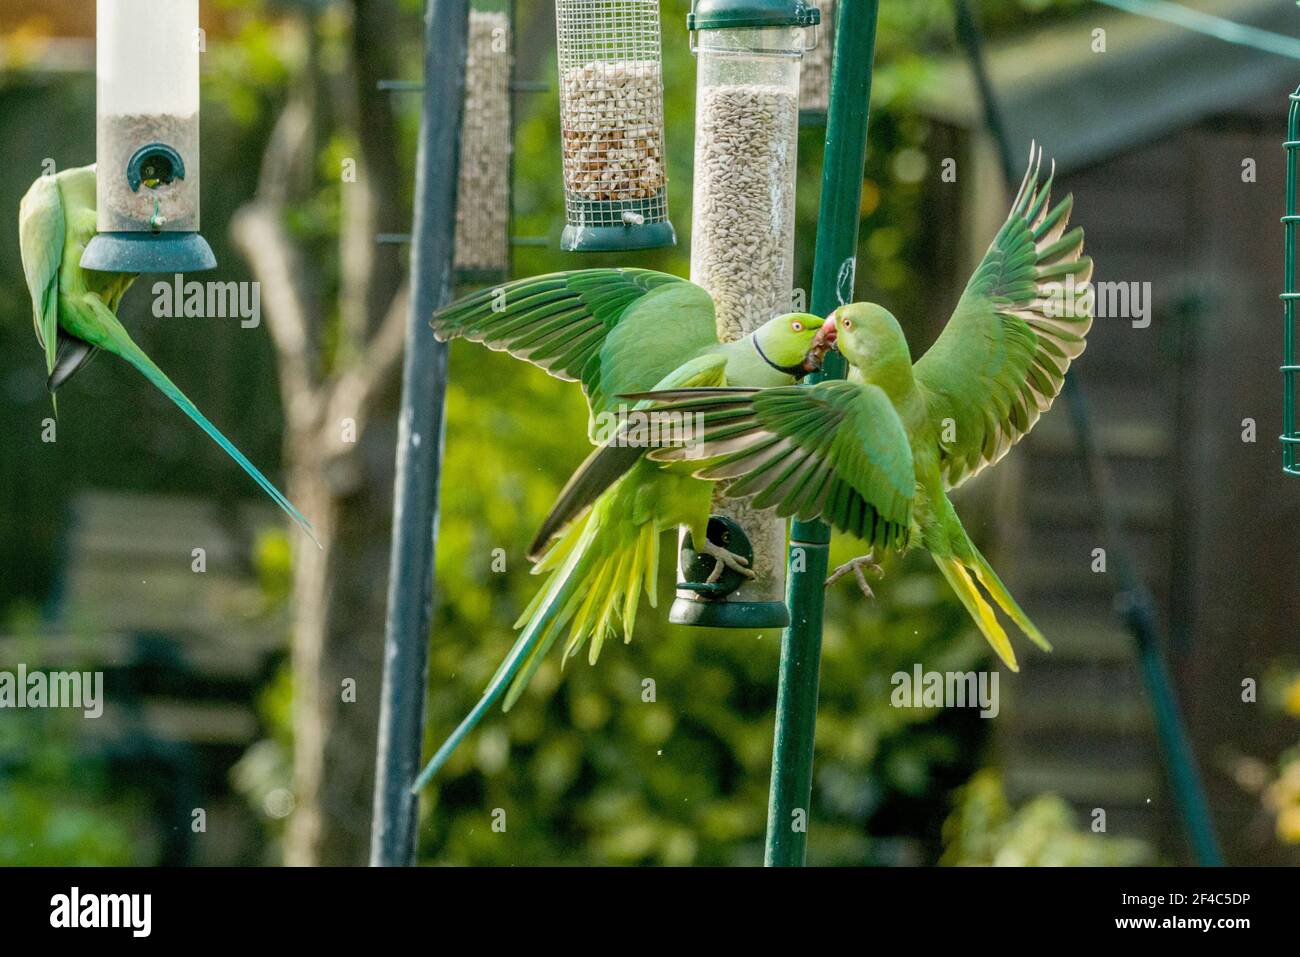 Rose-ringed or Ring-necked parakeets [Psittacula krameri] squabbling on bird feeder.  London, Uk. Stock Photo